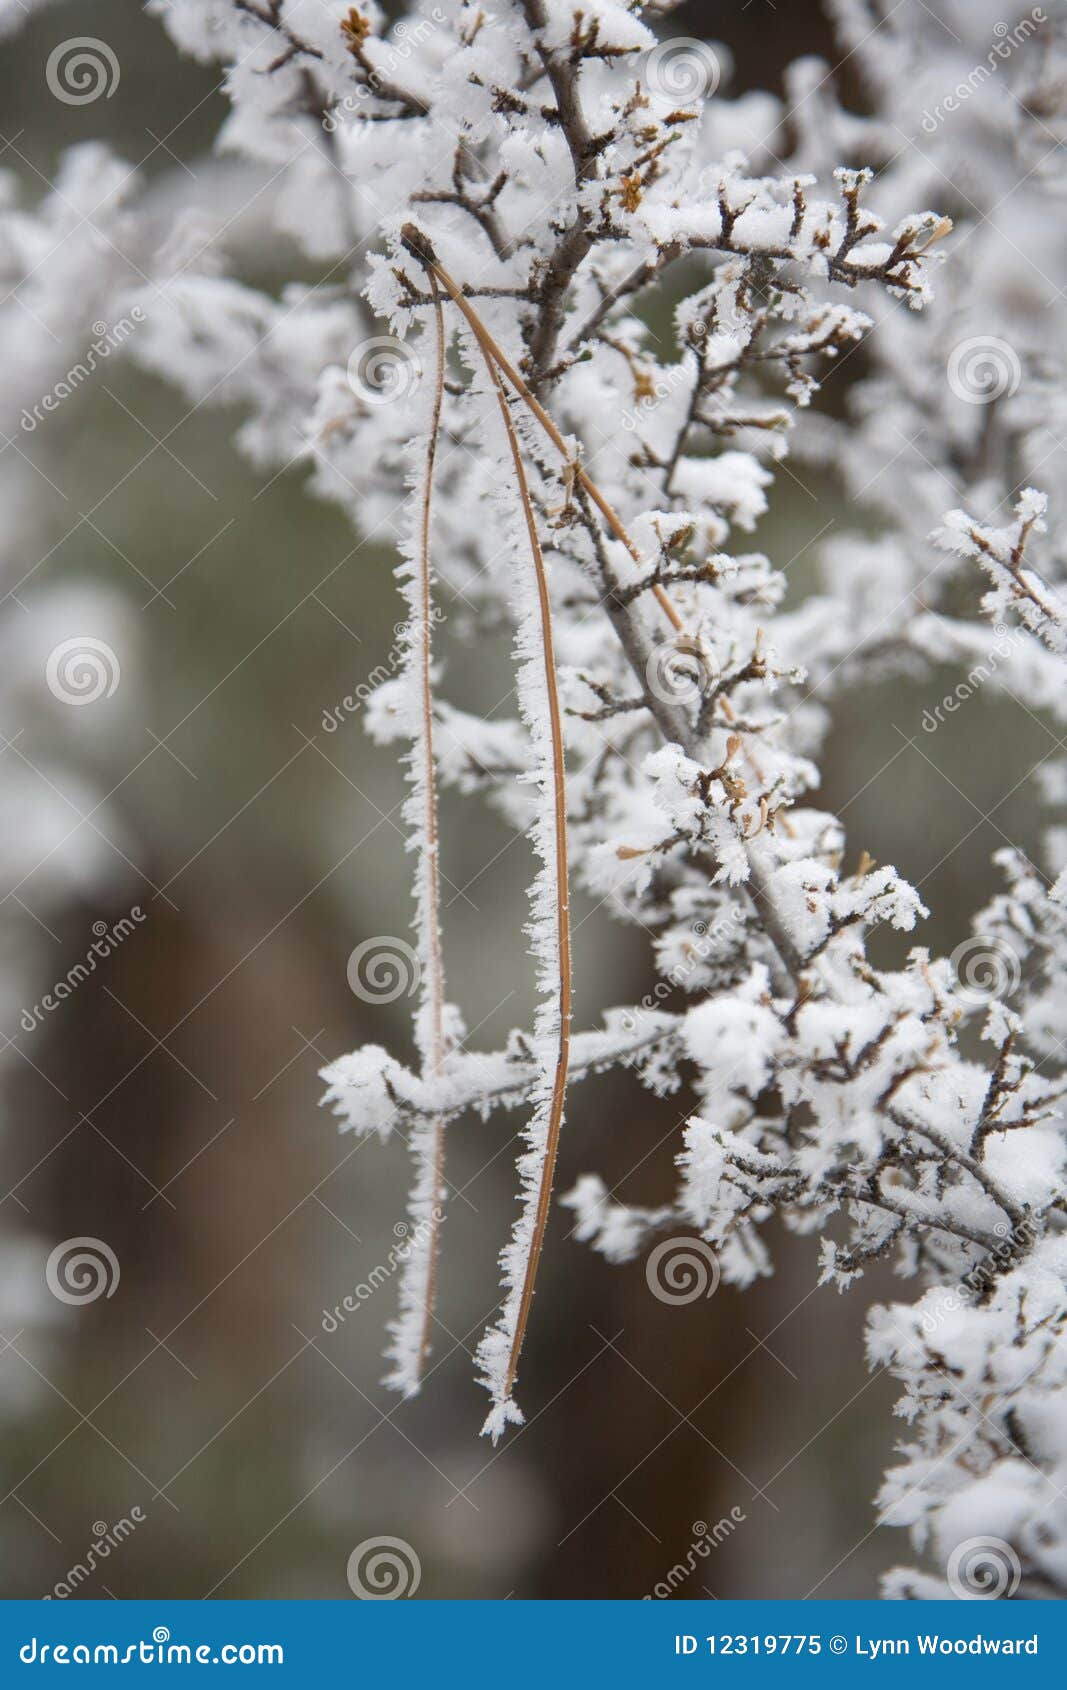 rime covering pine needle in gooseberry bush